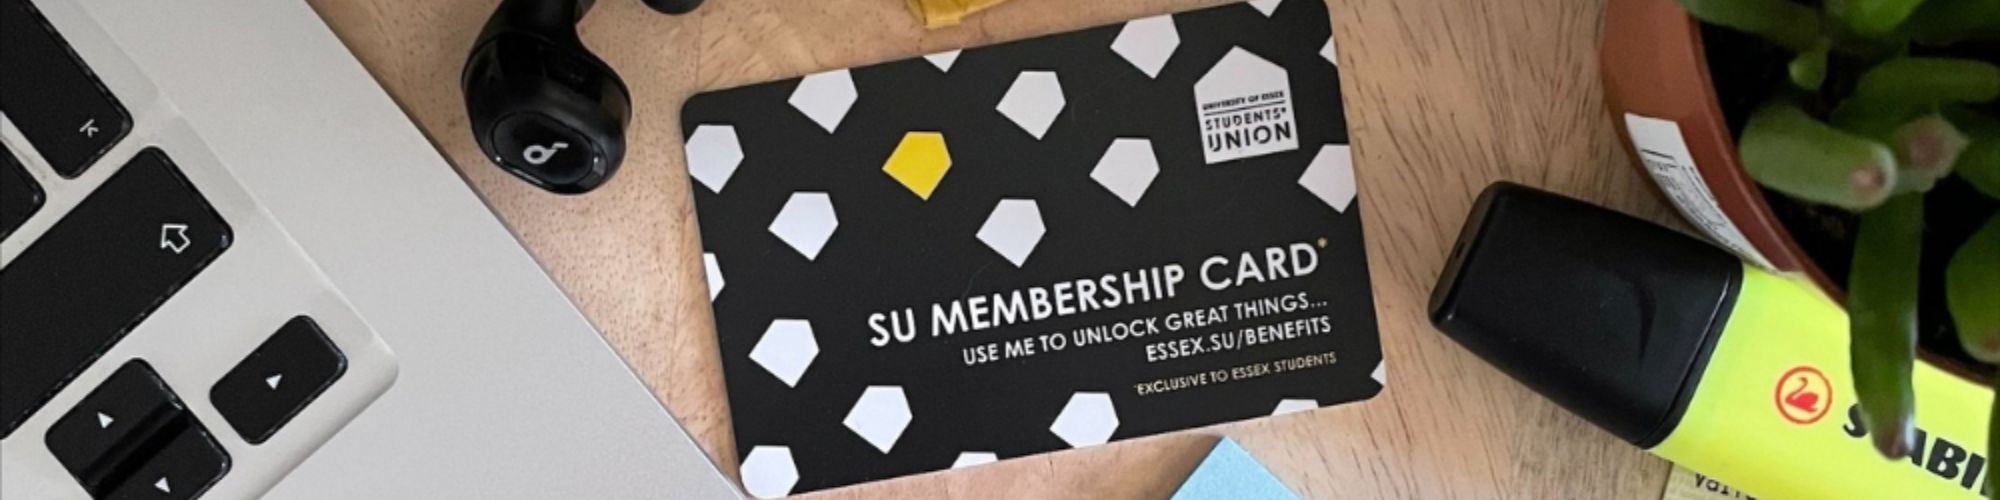 essex su membership card